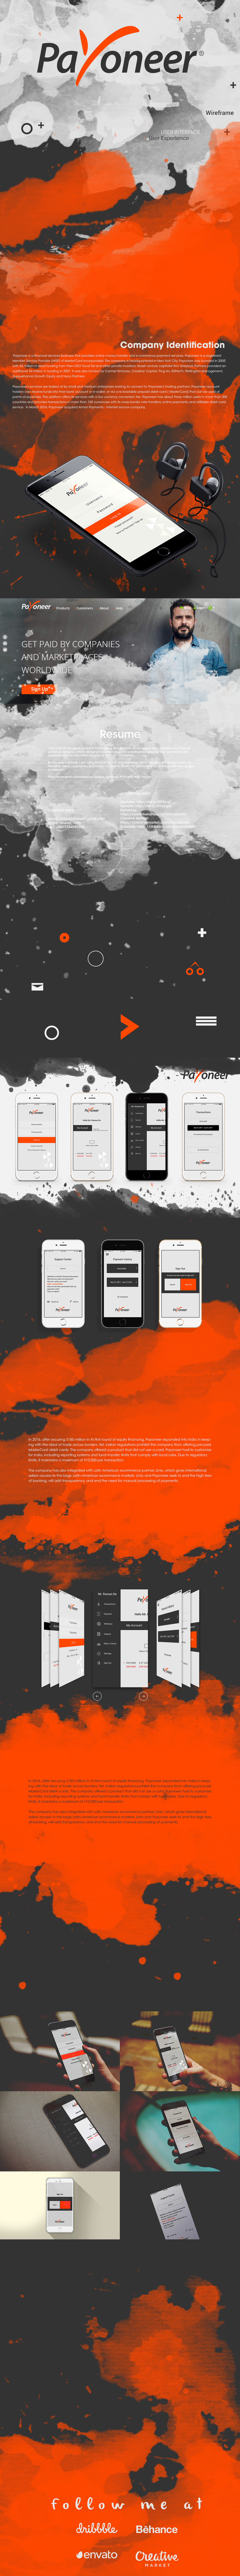 free psd user interface payoneer free mobile app free ui design PSD Templates free download free free mockup 